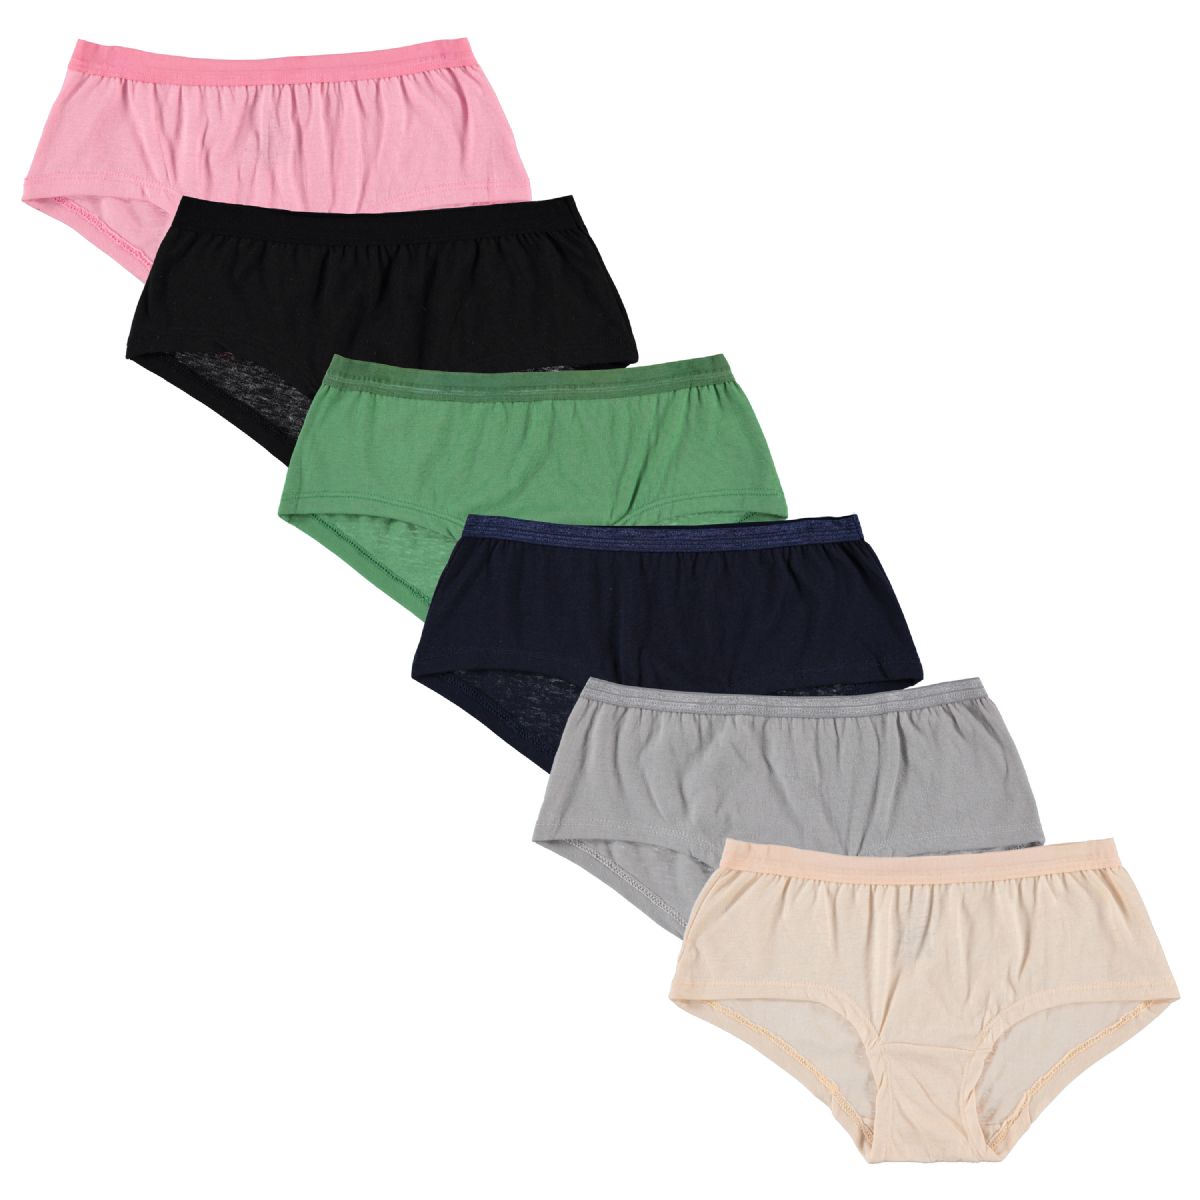 24 Wholesale Yacht & Smith Womens Cotton Lycra Underwear, Panty Briefs, 95% Cotton Soft Assorted Colors, Size 2X-Large